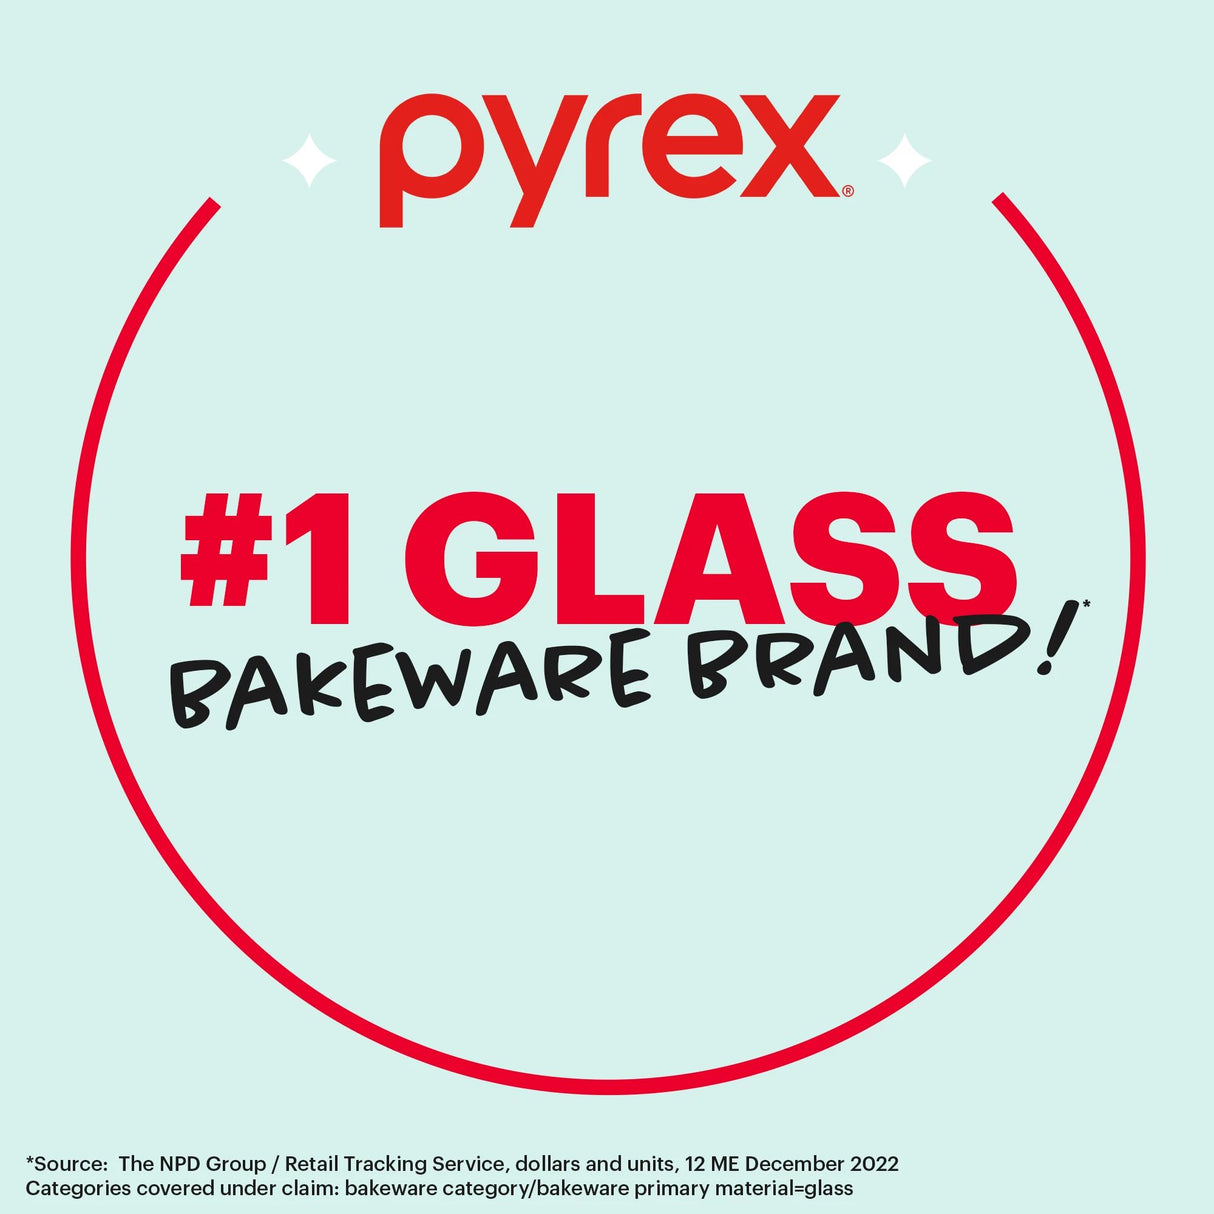  Pyrex #1 Glass Bakeware Brand